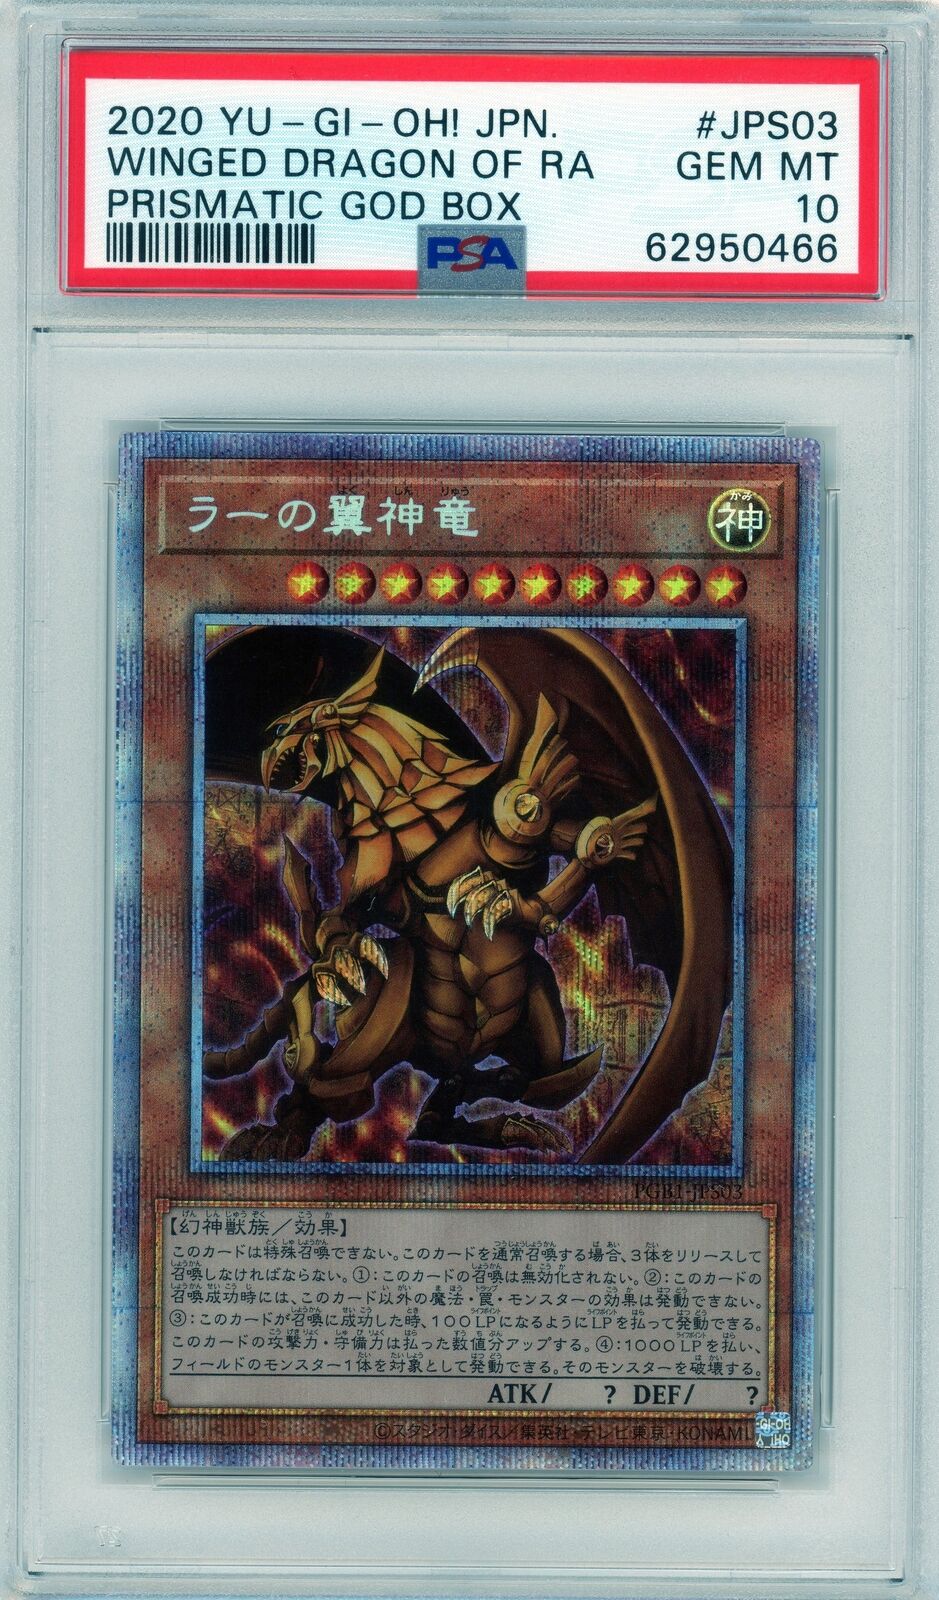 PSA 10 Winged dragon of ra // 2020 Yugioh Prismatic god box // Japanese #JPS03